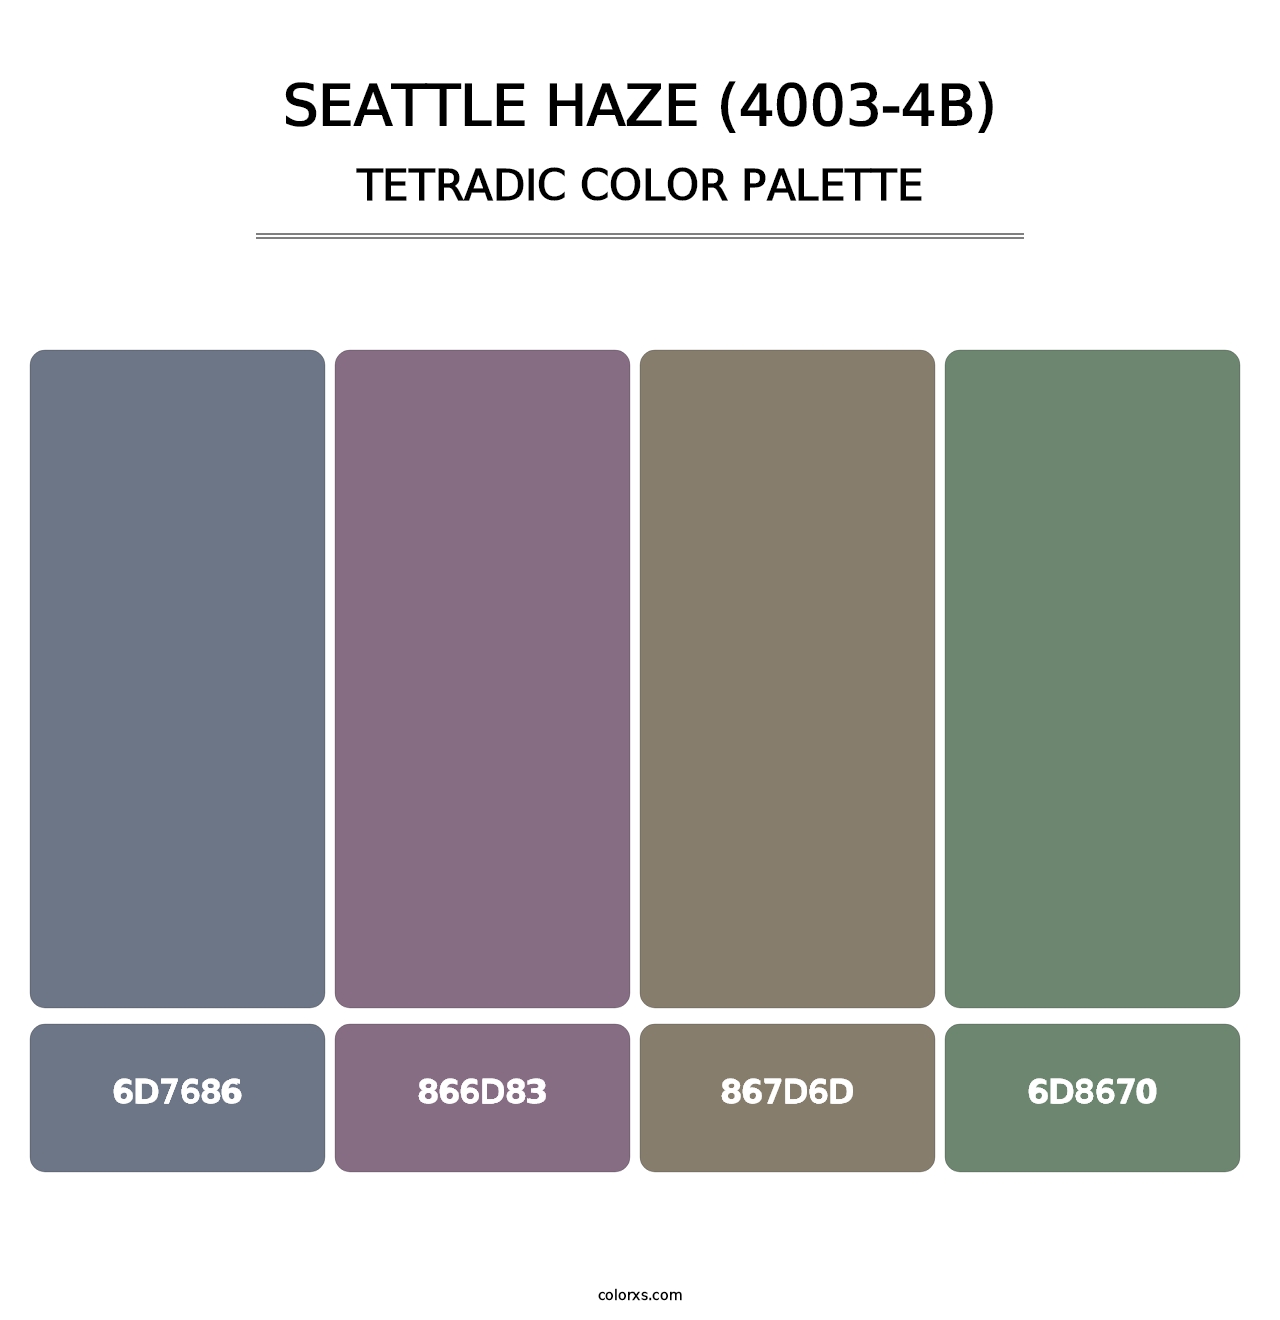 Seattle Haze (4003-4B) - Tetradic Color Palette